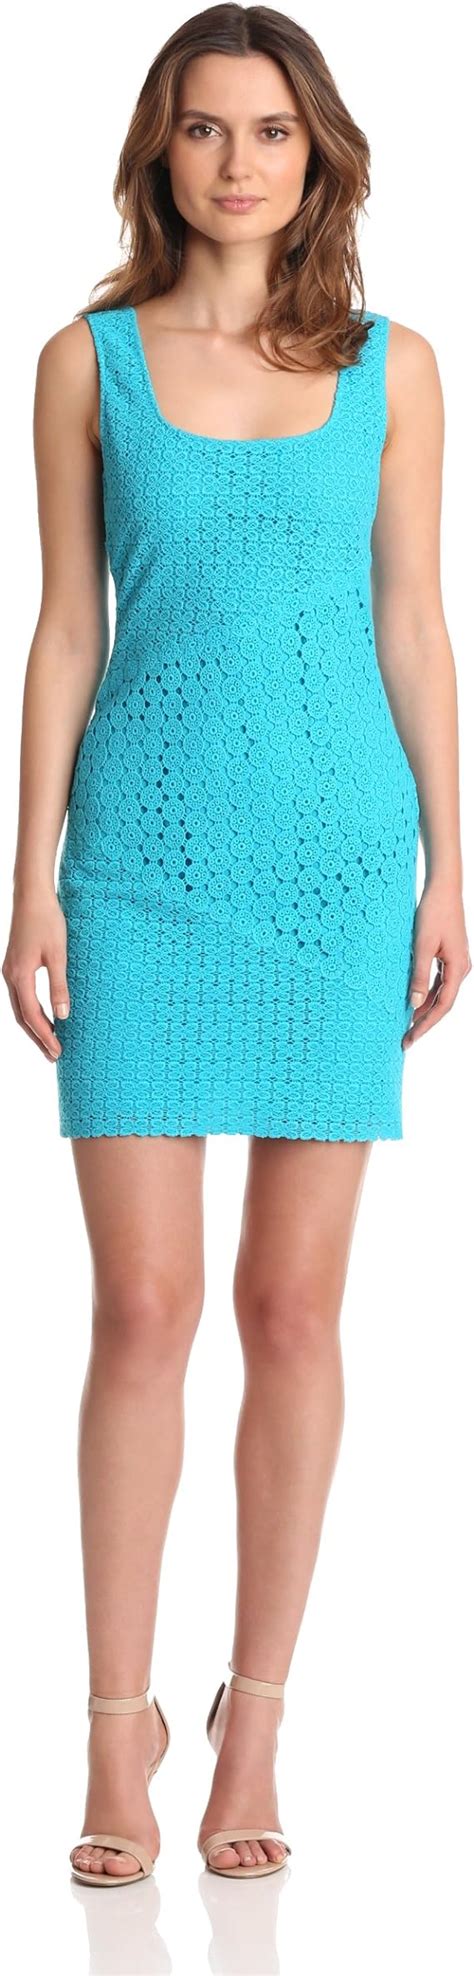 Yoana Baraschi Women S Lace Cyprus Tank Dress Blue Lacquer 0 At Amazon Women’s Clothing Store